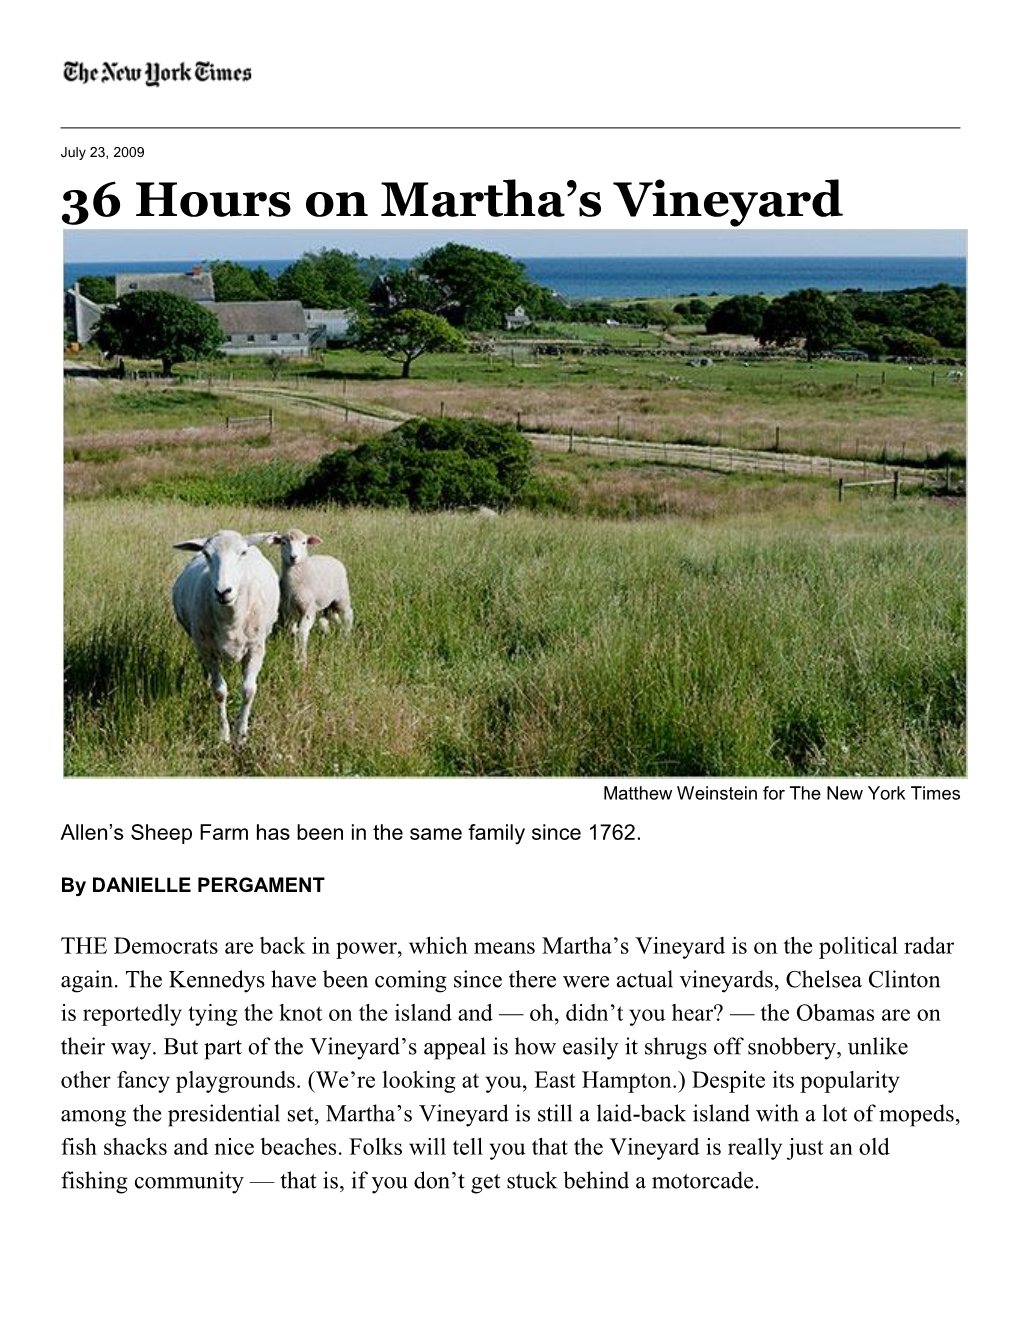 36 Hours on Martha's Vineyard